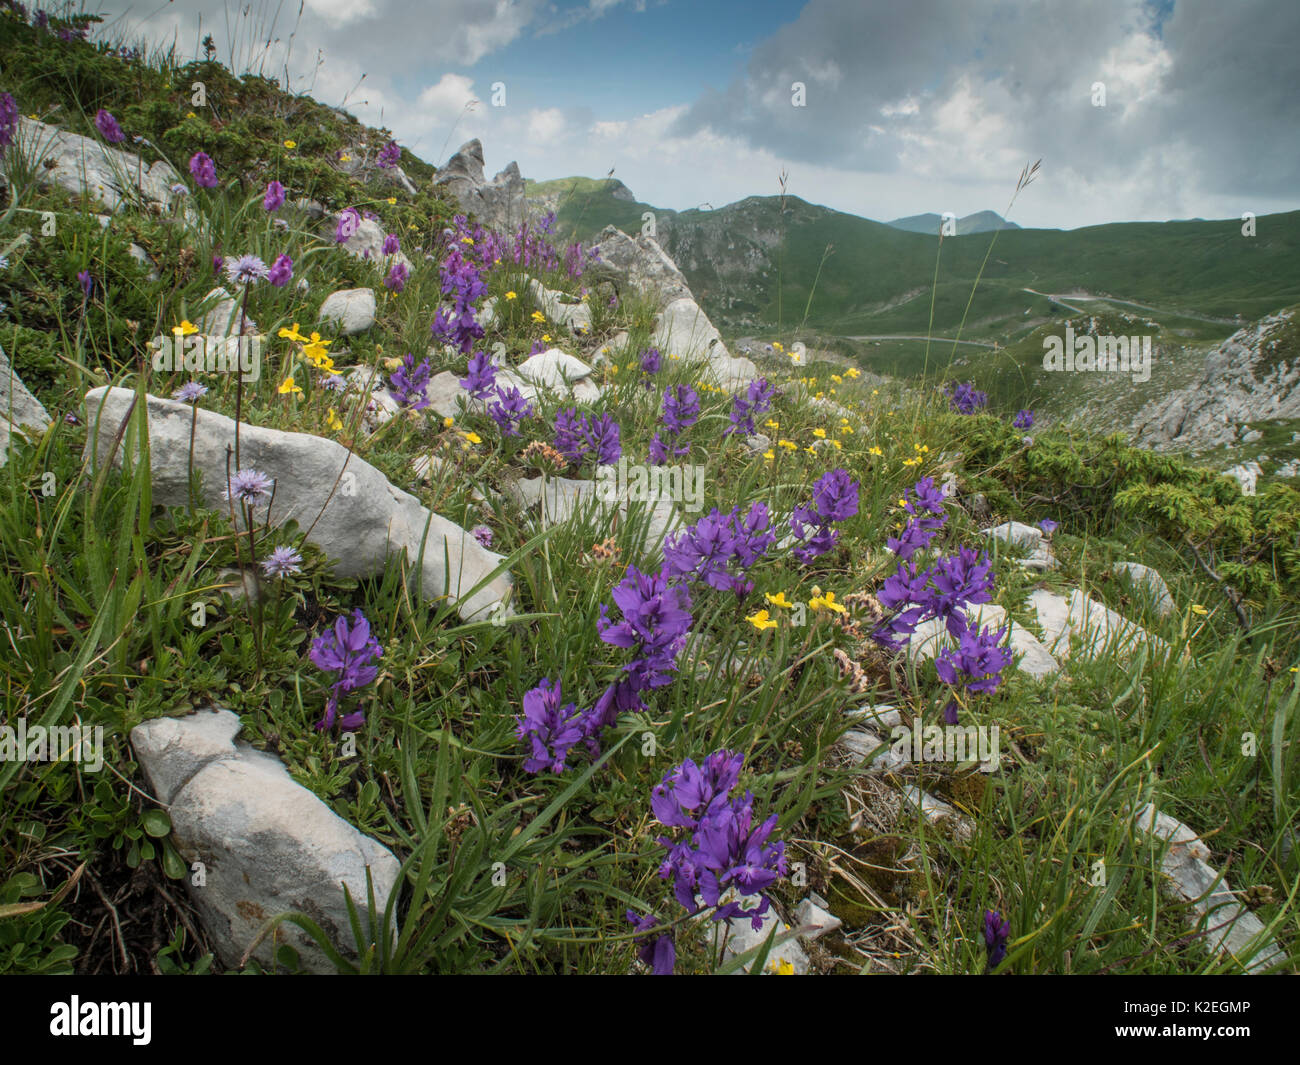 Great milkwort (Polygala major) Campo Imperatore, Abruzzo, Italy June 2016 Stock Photo